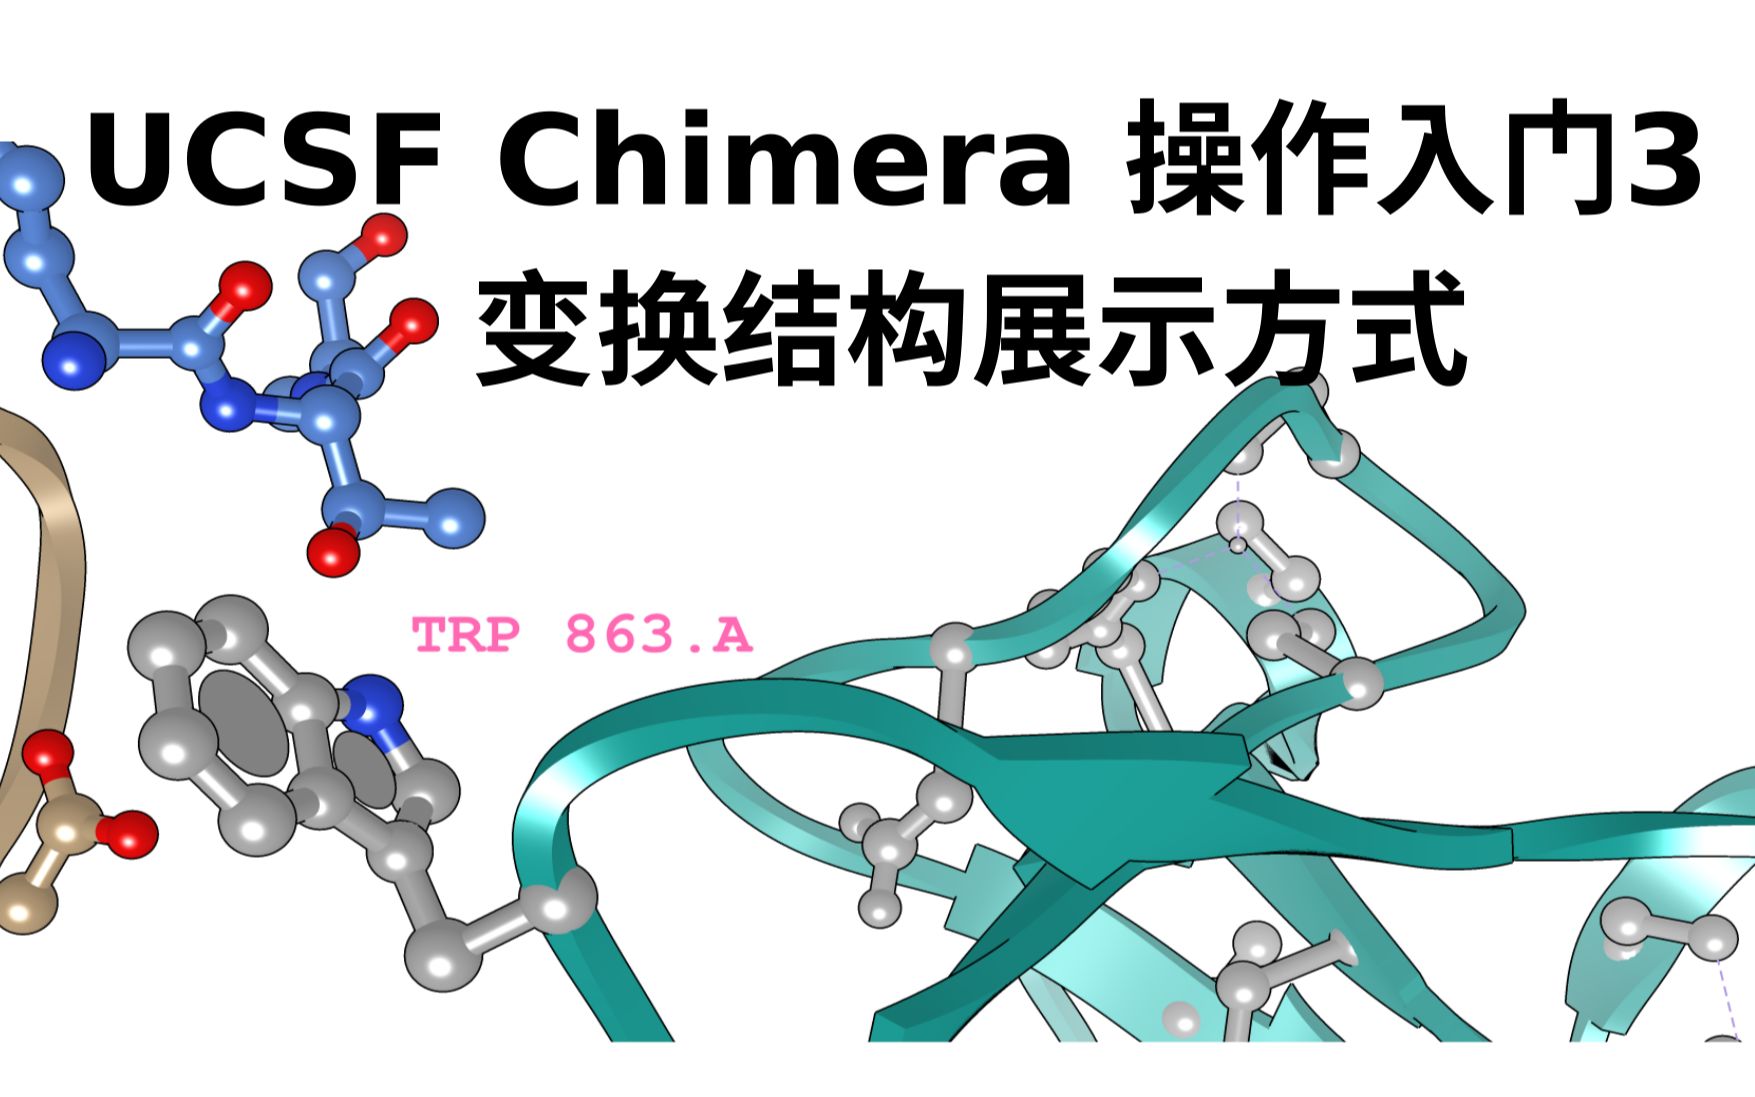 UCSF Chimera 蛋白配体氢键作用(更改氢键颜色/宽度)